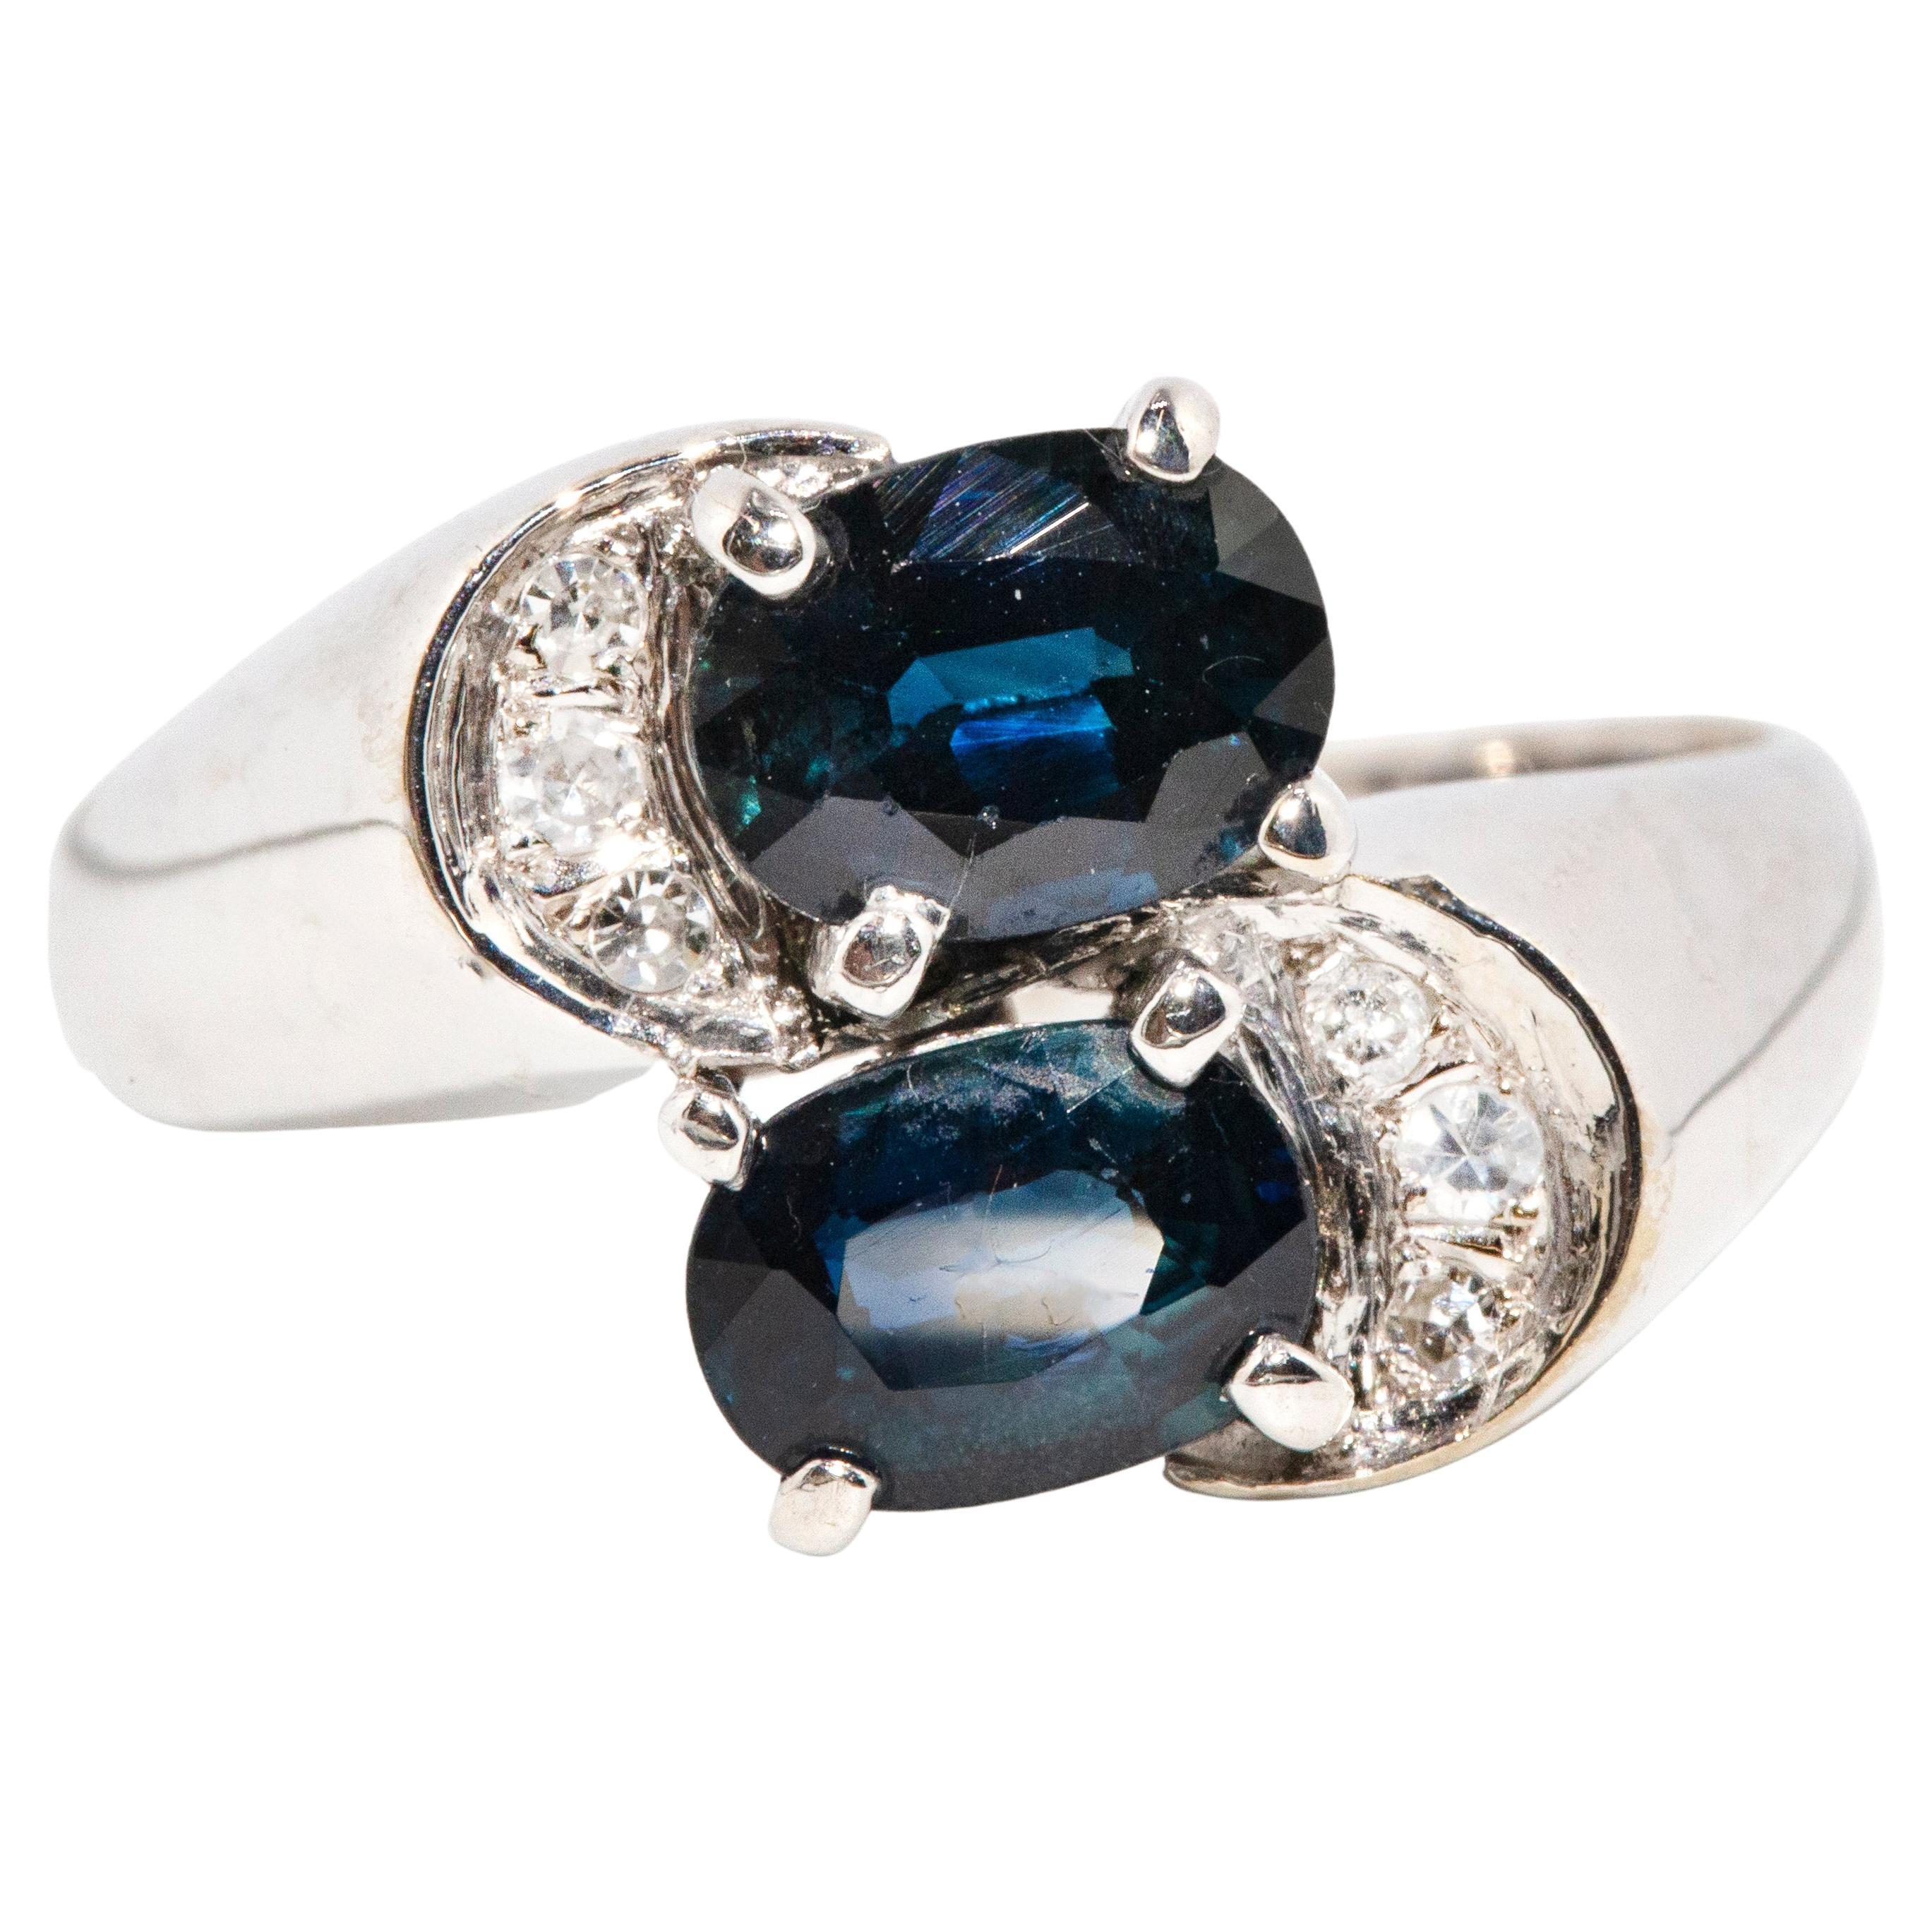 Vintage Circa 1980s 1.85ct Twin Blue Sapphire & Diamond Ring 14 Carat White Gold